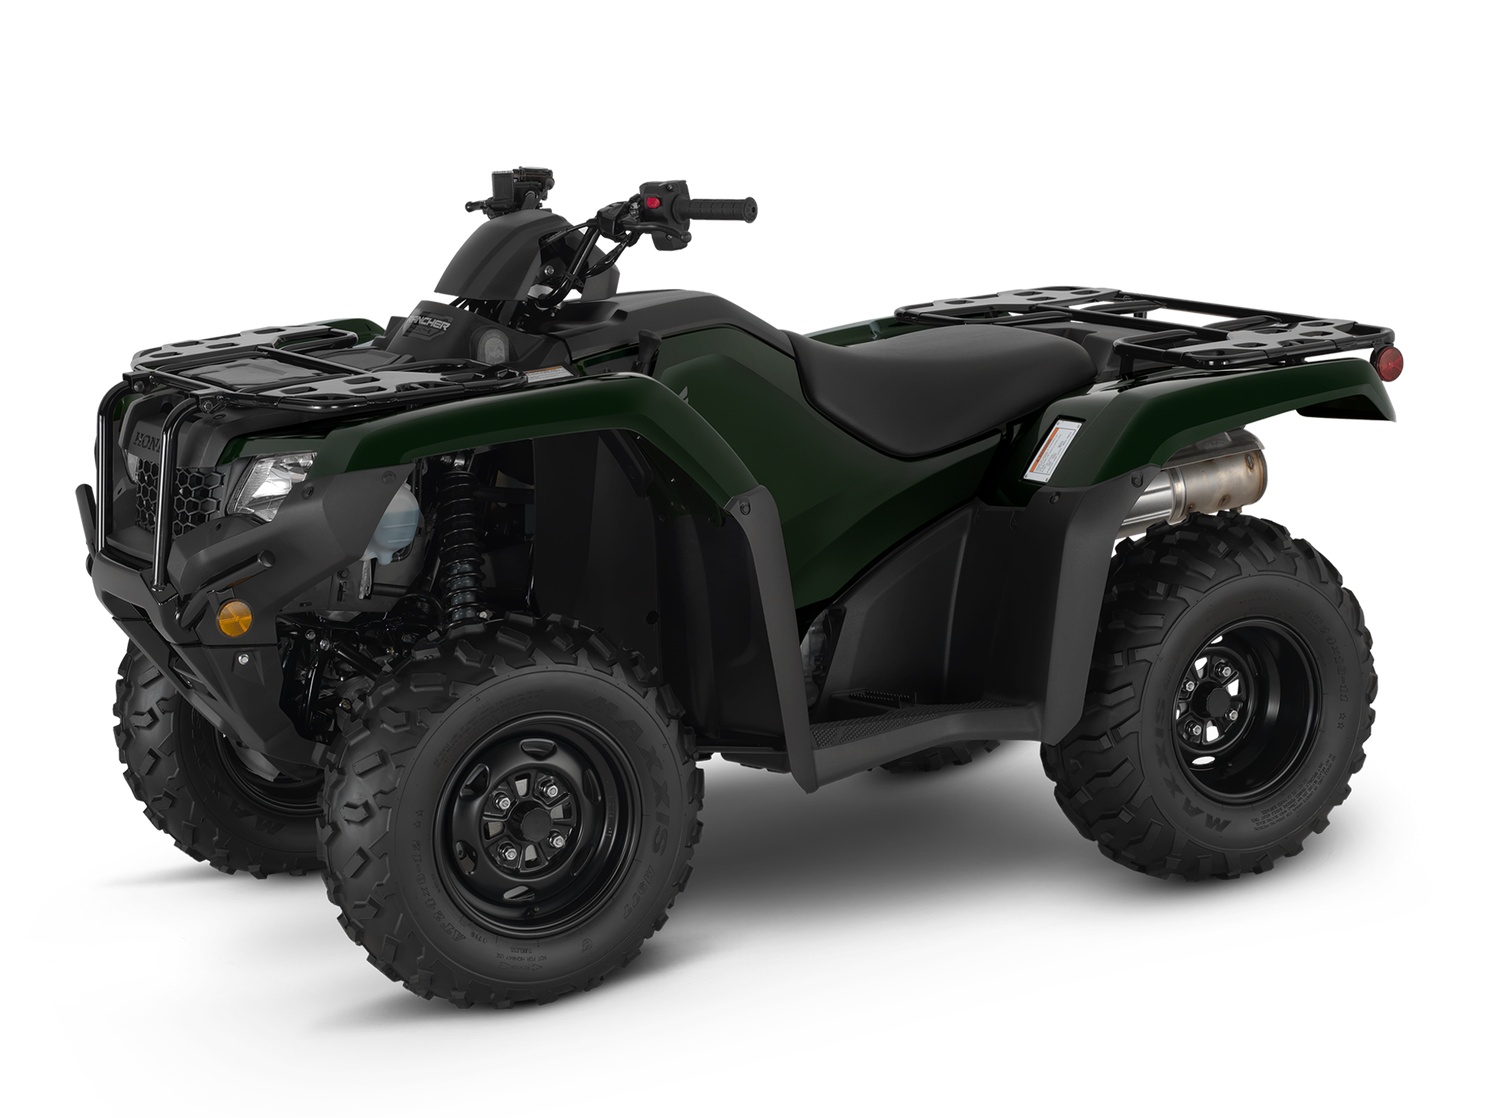 2023 Honda TRX 420 Black Forest Green